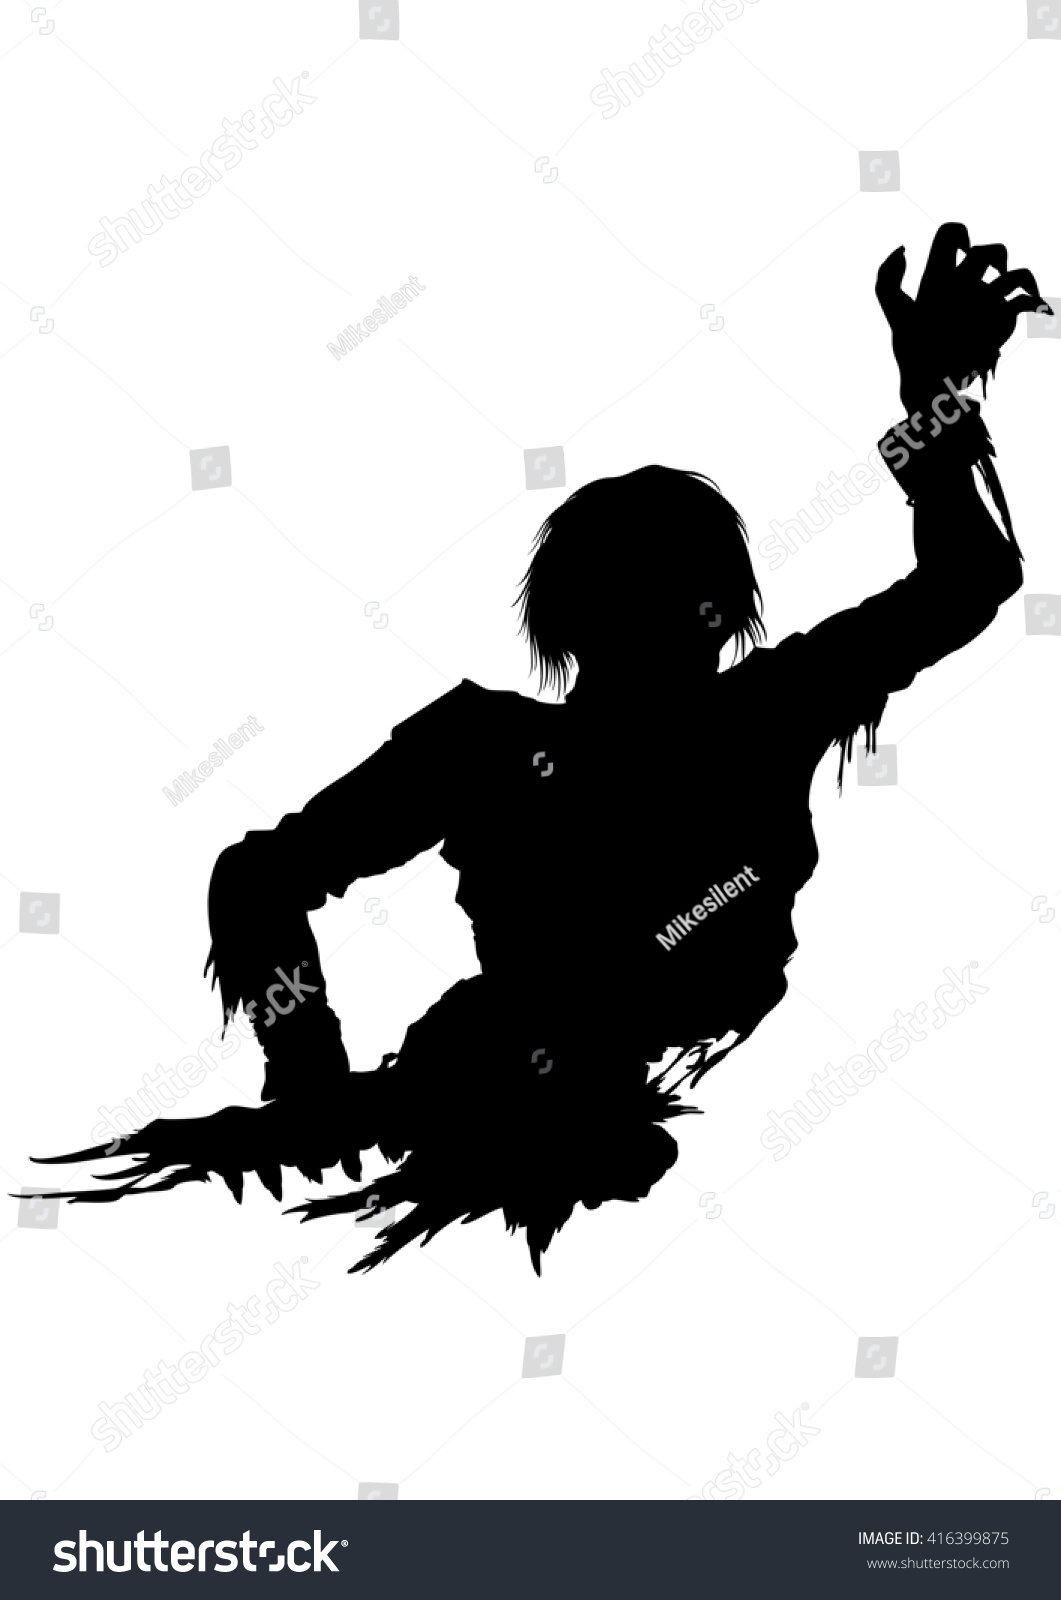 zombie silhouette clip art - photo #27